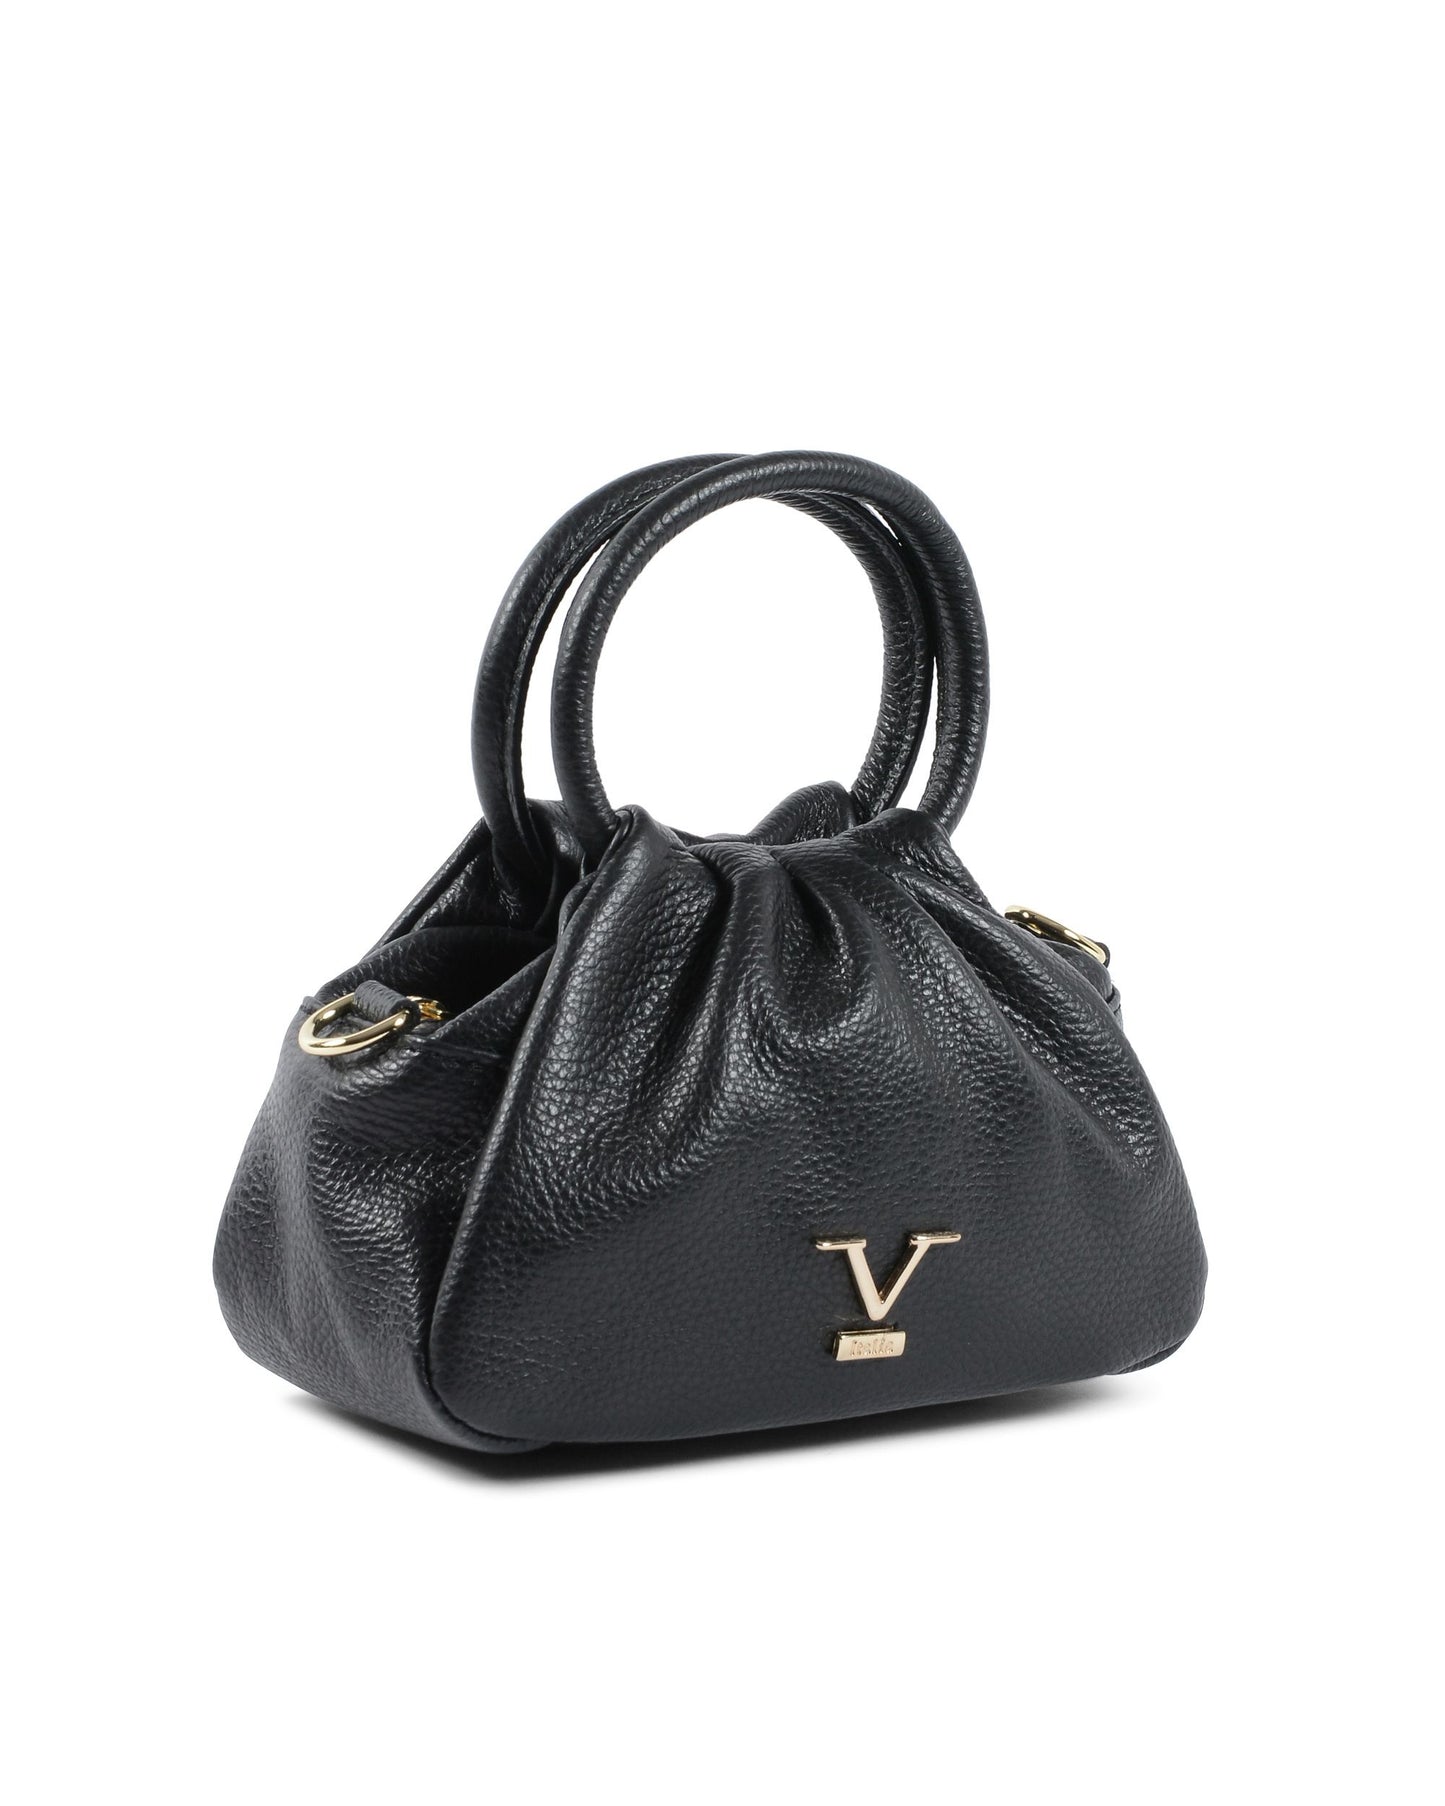 V Italia Womens Mini Bag Black 10311 DOLLARO NERO